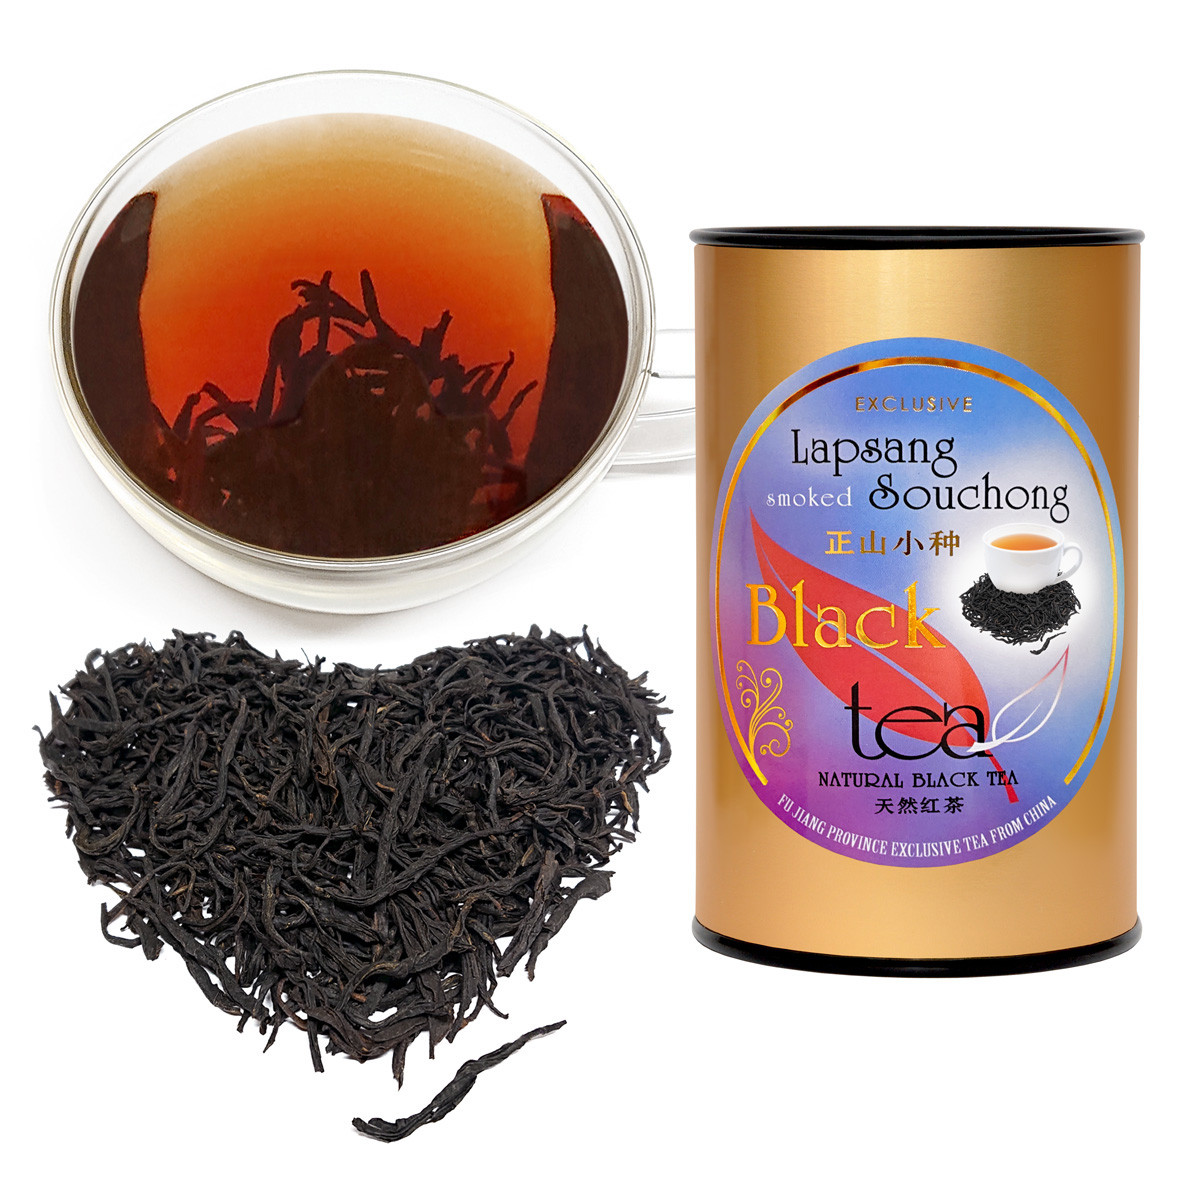 LAPSANG SOUCHONG - Kитайский черный чай c ароматoм дыма PT100г Чёрный чай